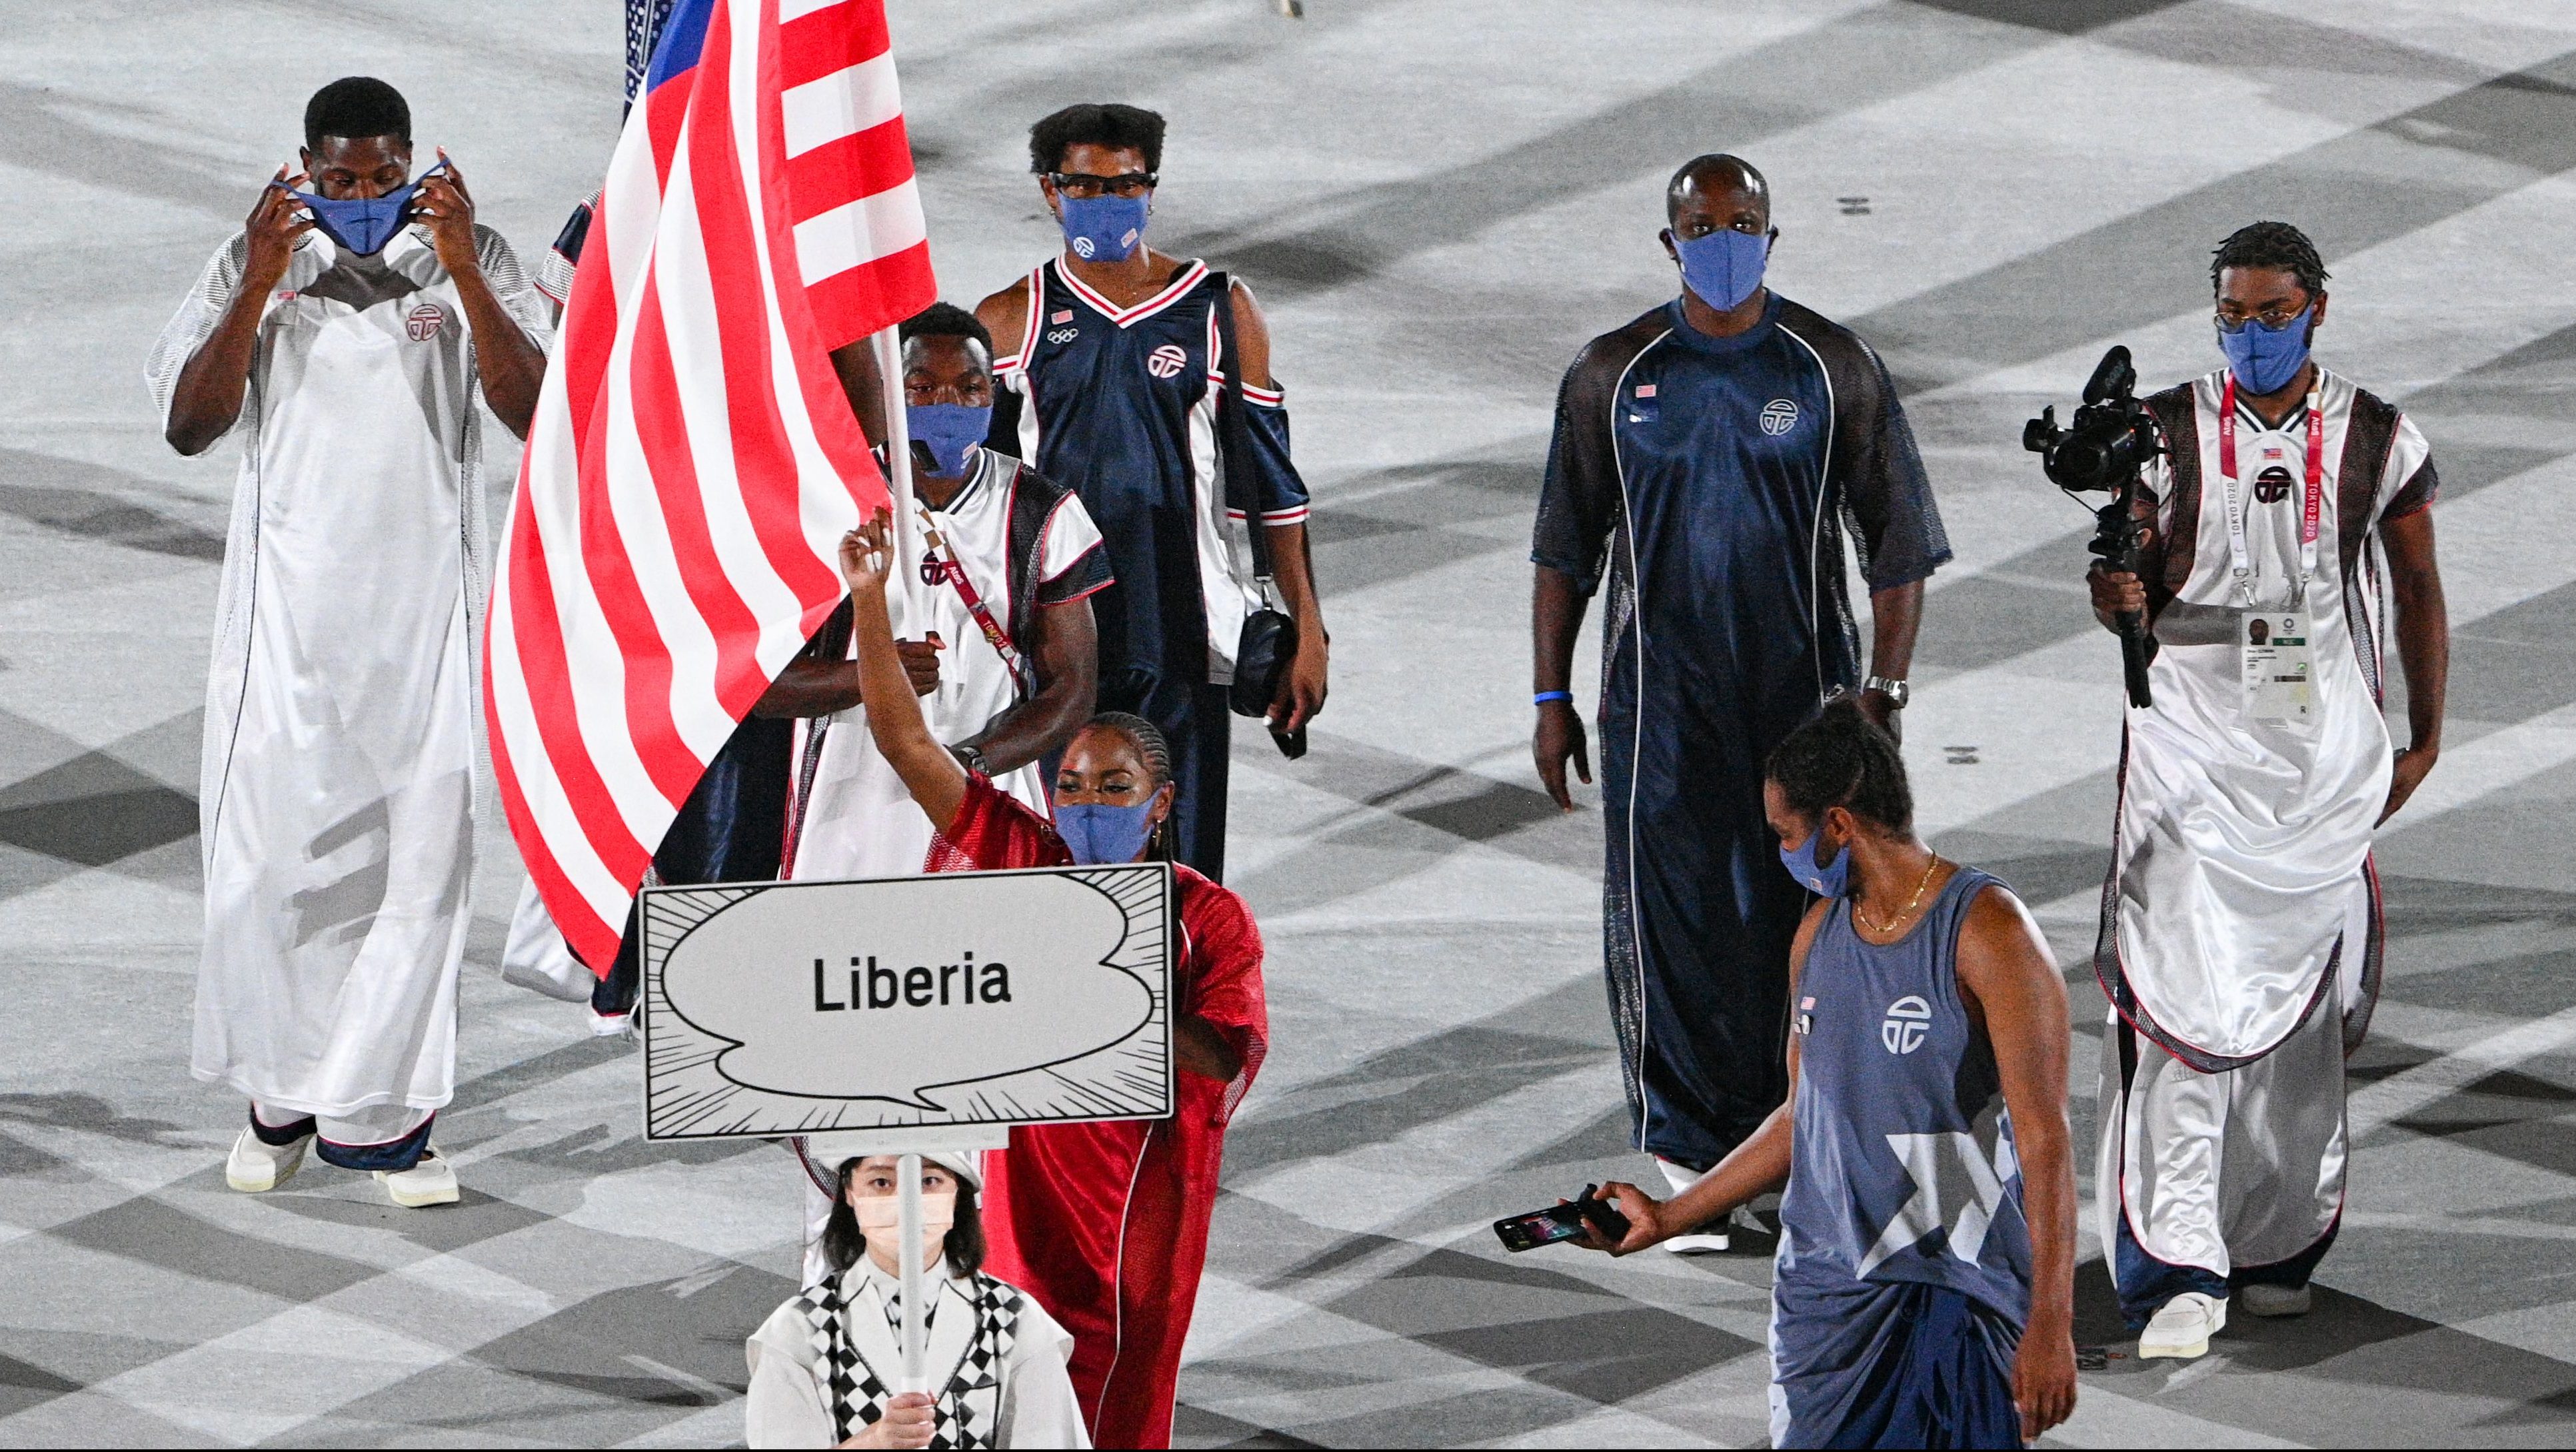 The Liberian Olympic team